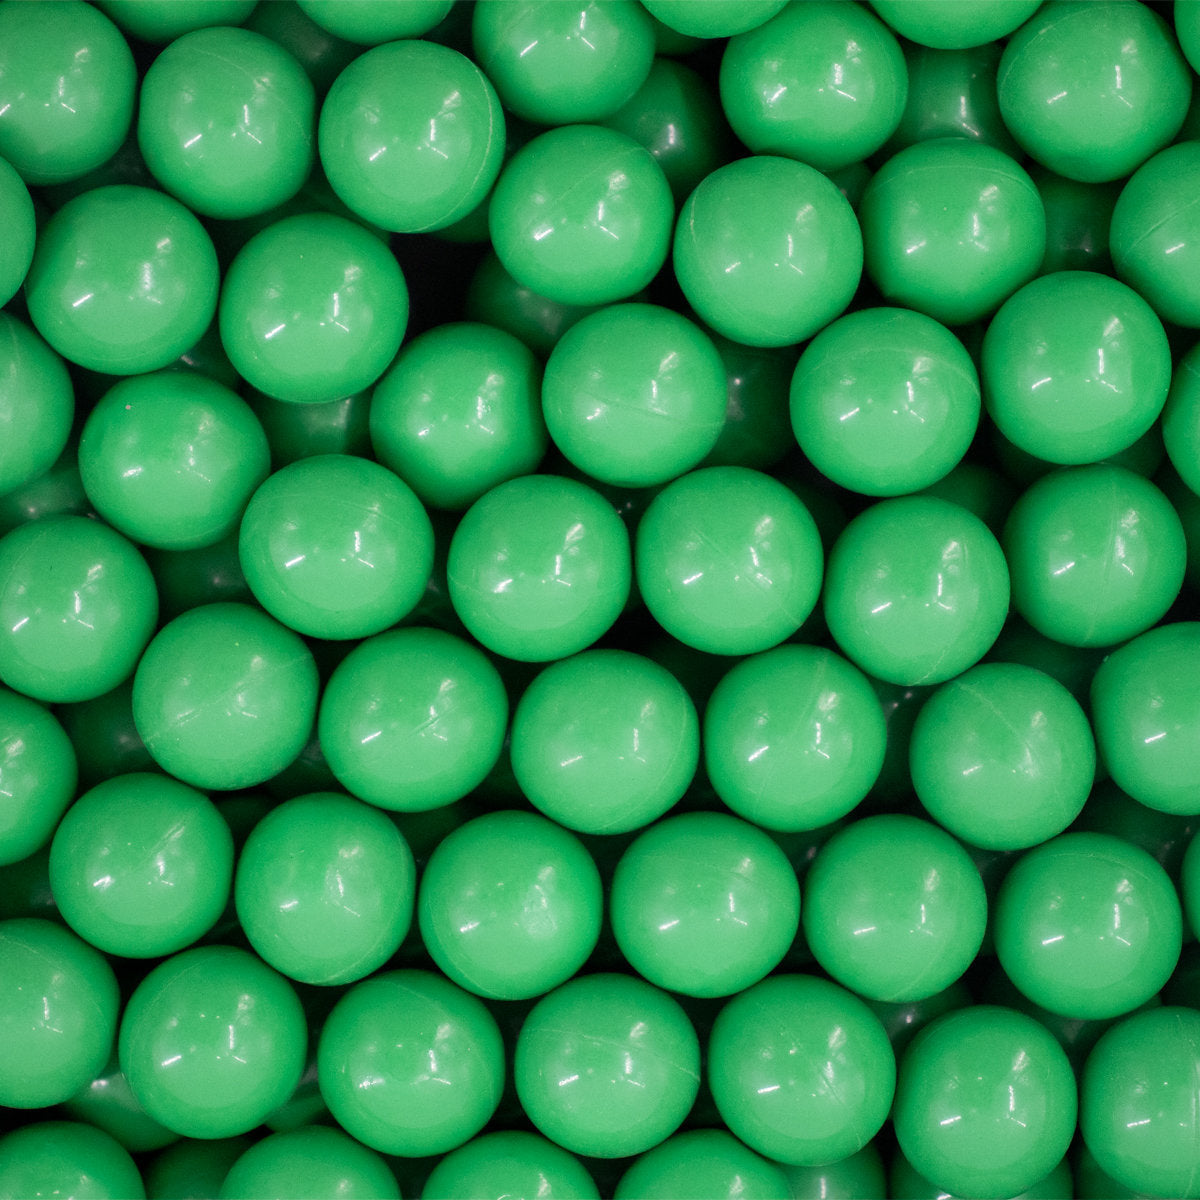 Valken Gfx .68 Caliber Paintballs - 2000 Count | Shop Paintballs